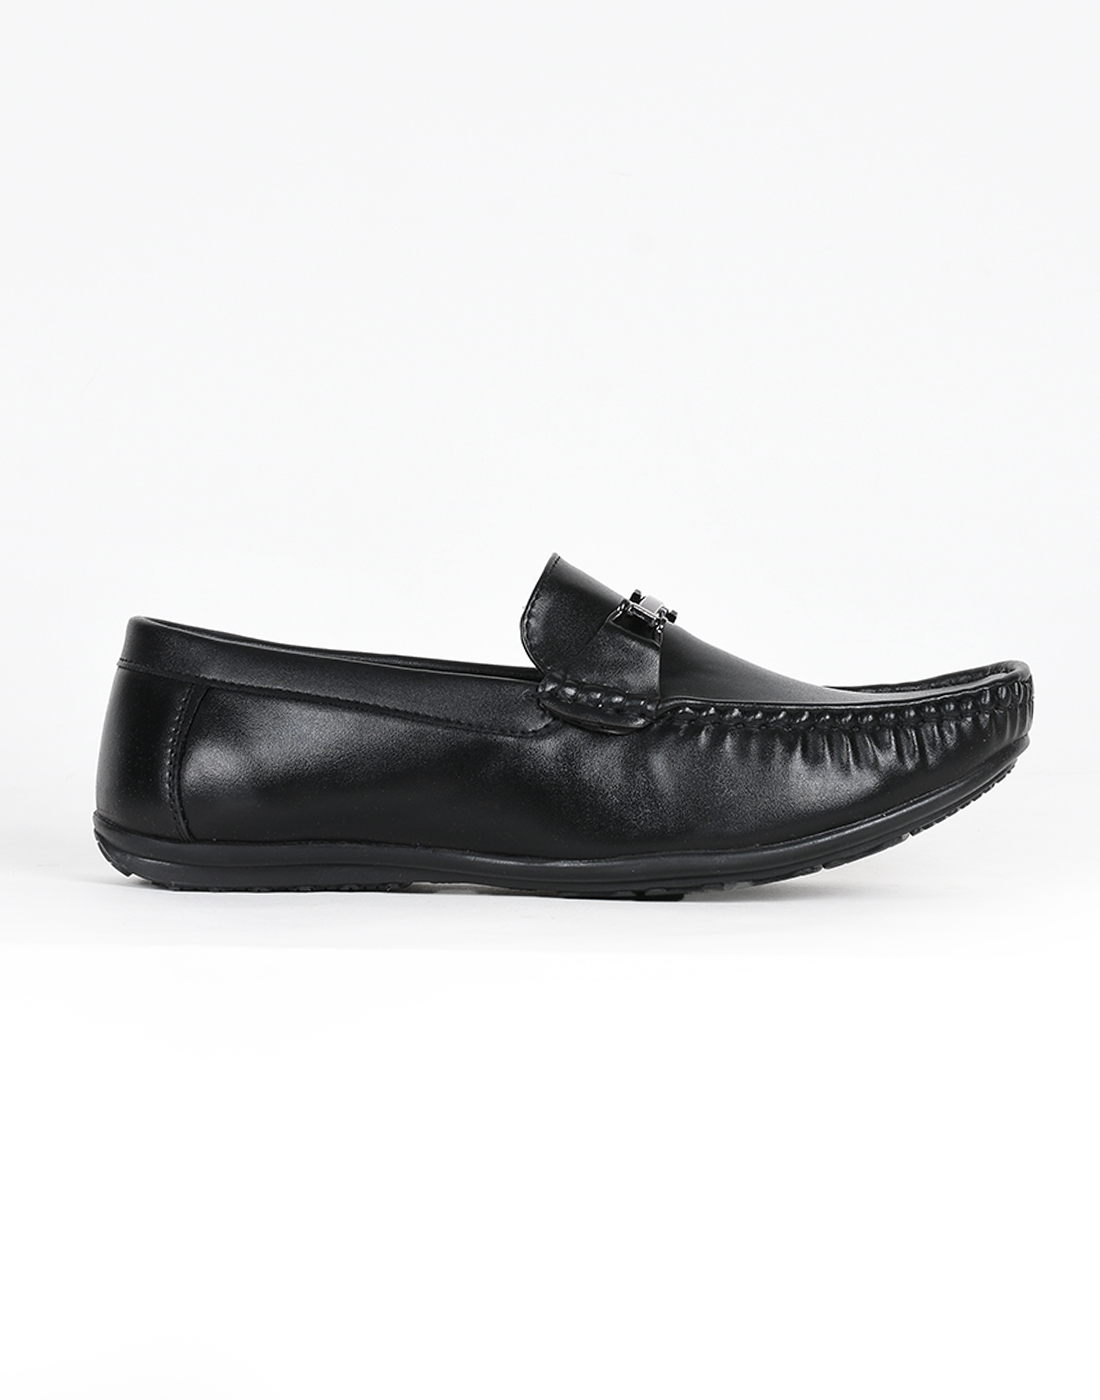 PARAGON Mens Solid Black Moccasins | Slip On Casual Wear Moccasin Shoes for Men